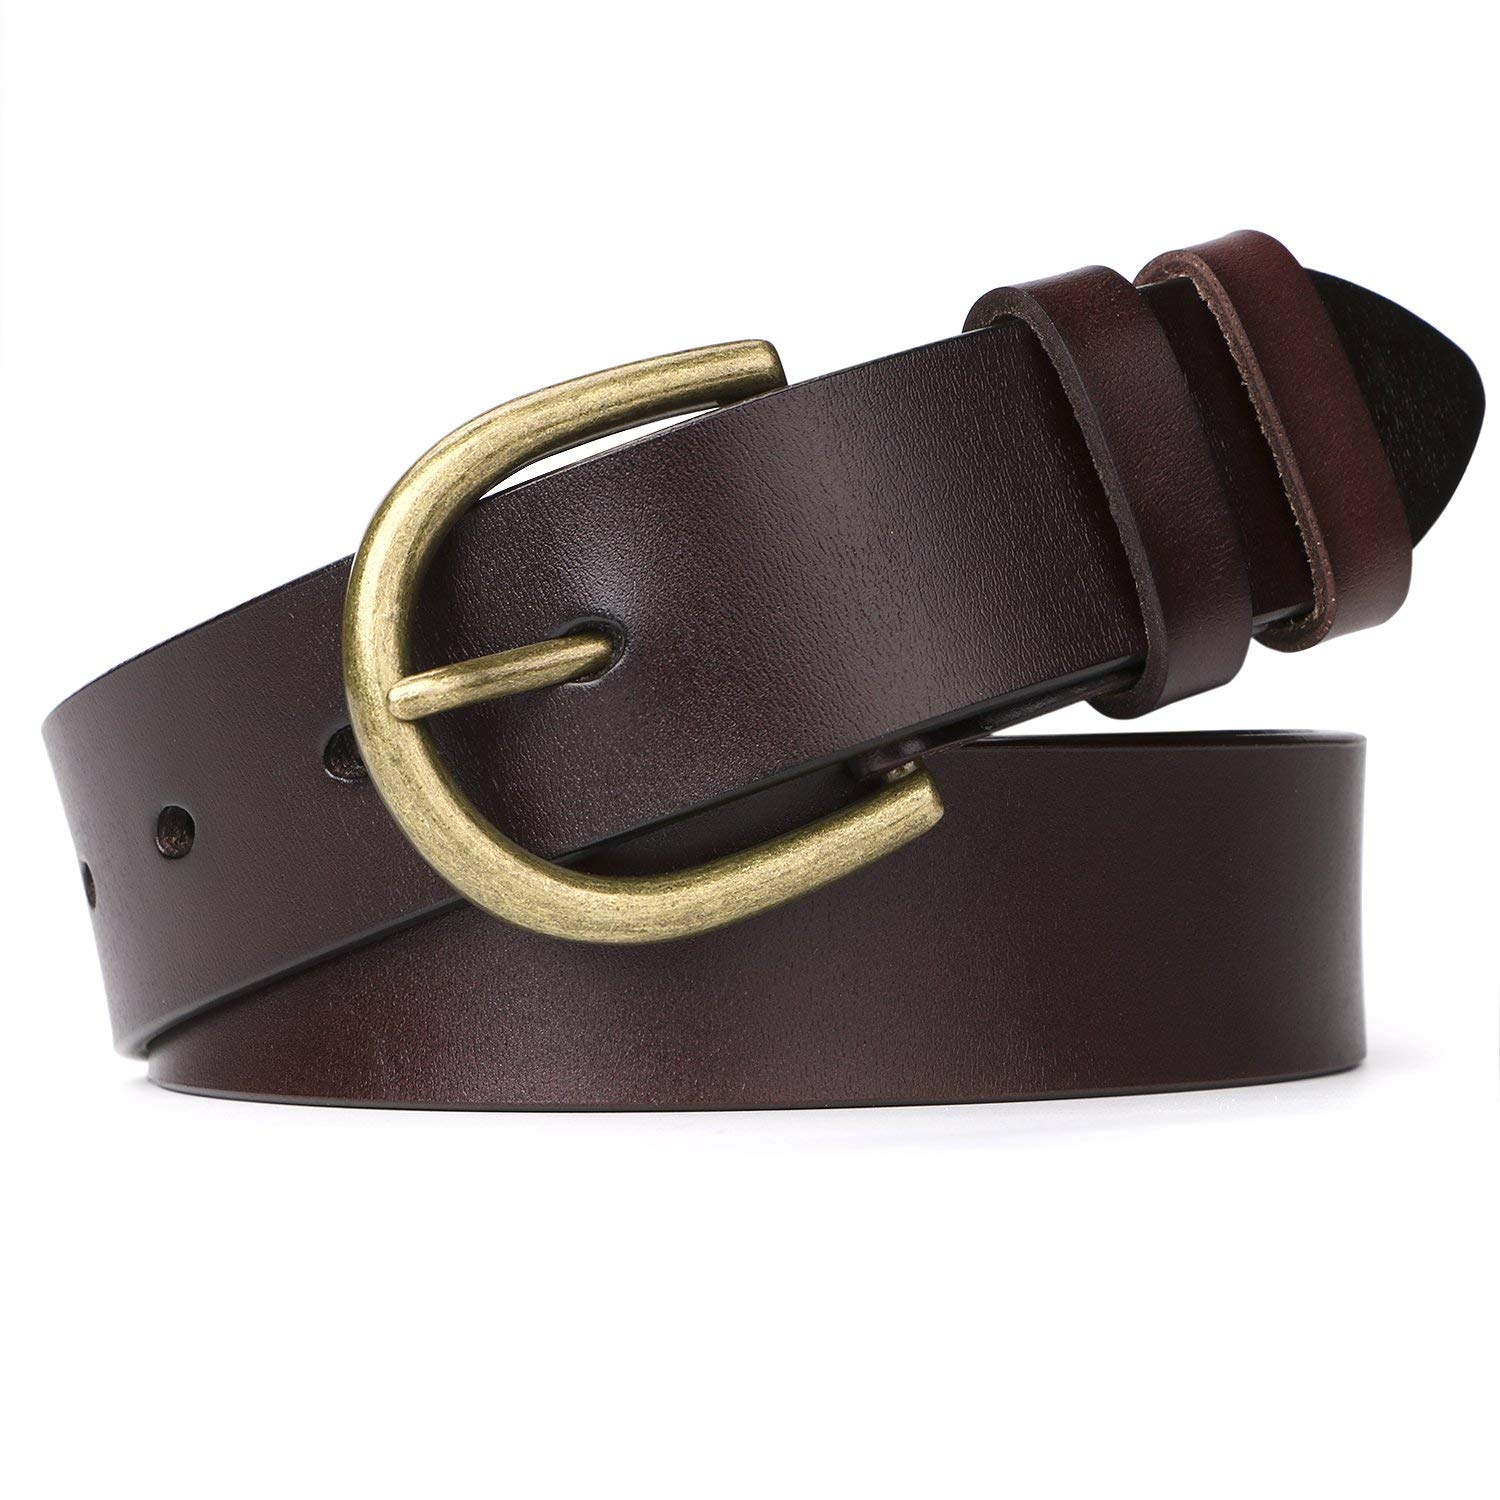 JASGOOD Leather Belts for Women Brown Belt for Jeans Pants Dress